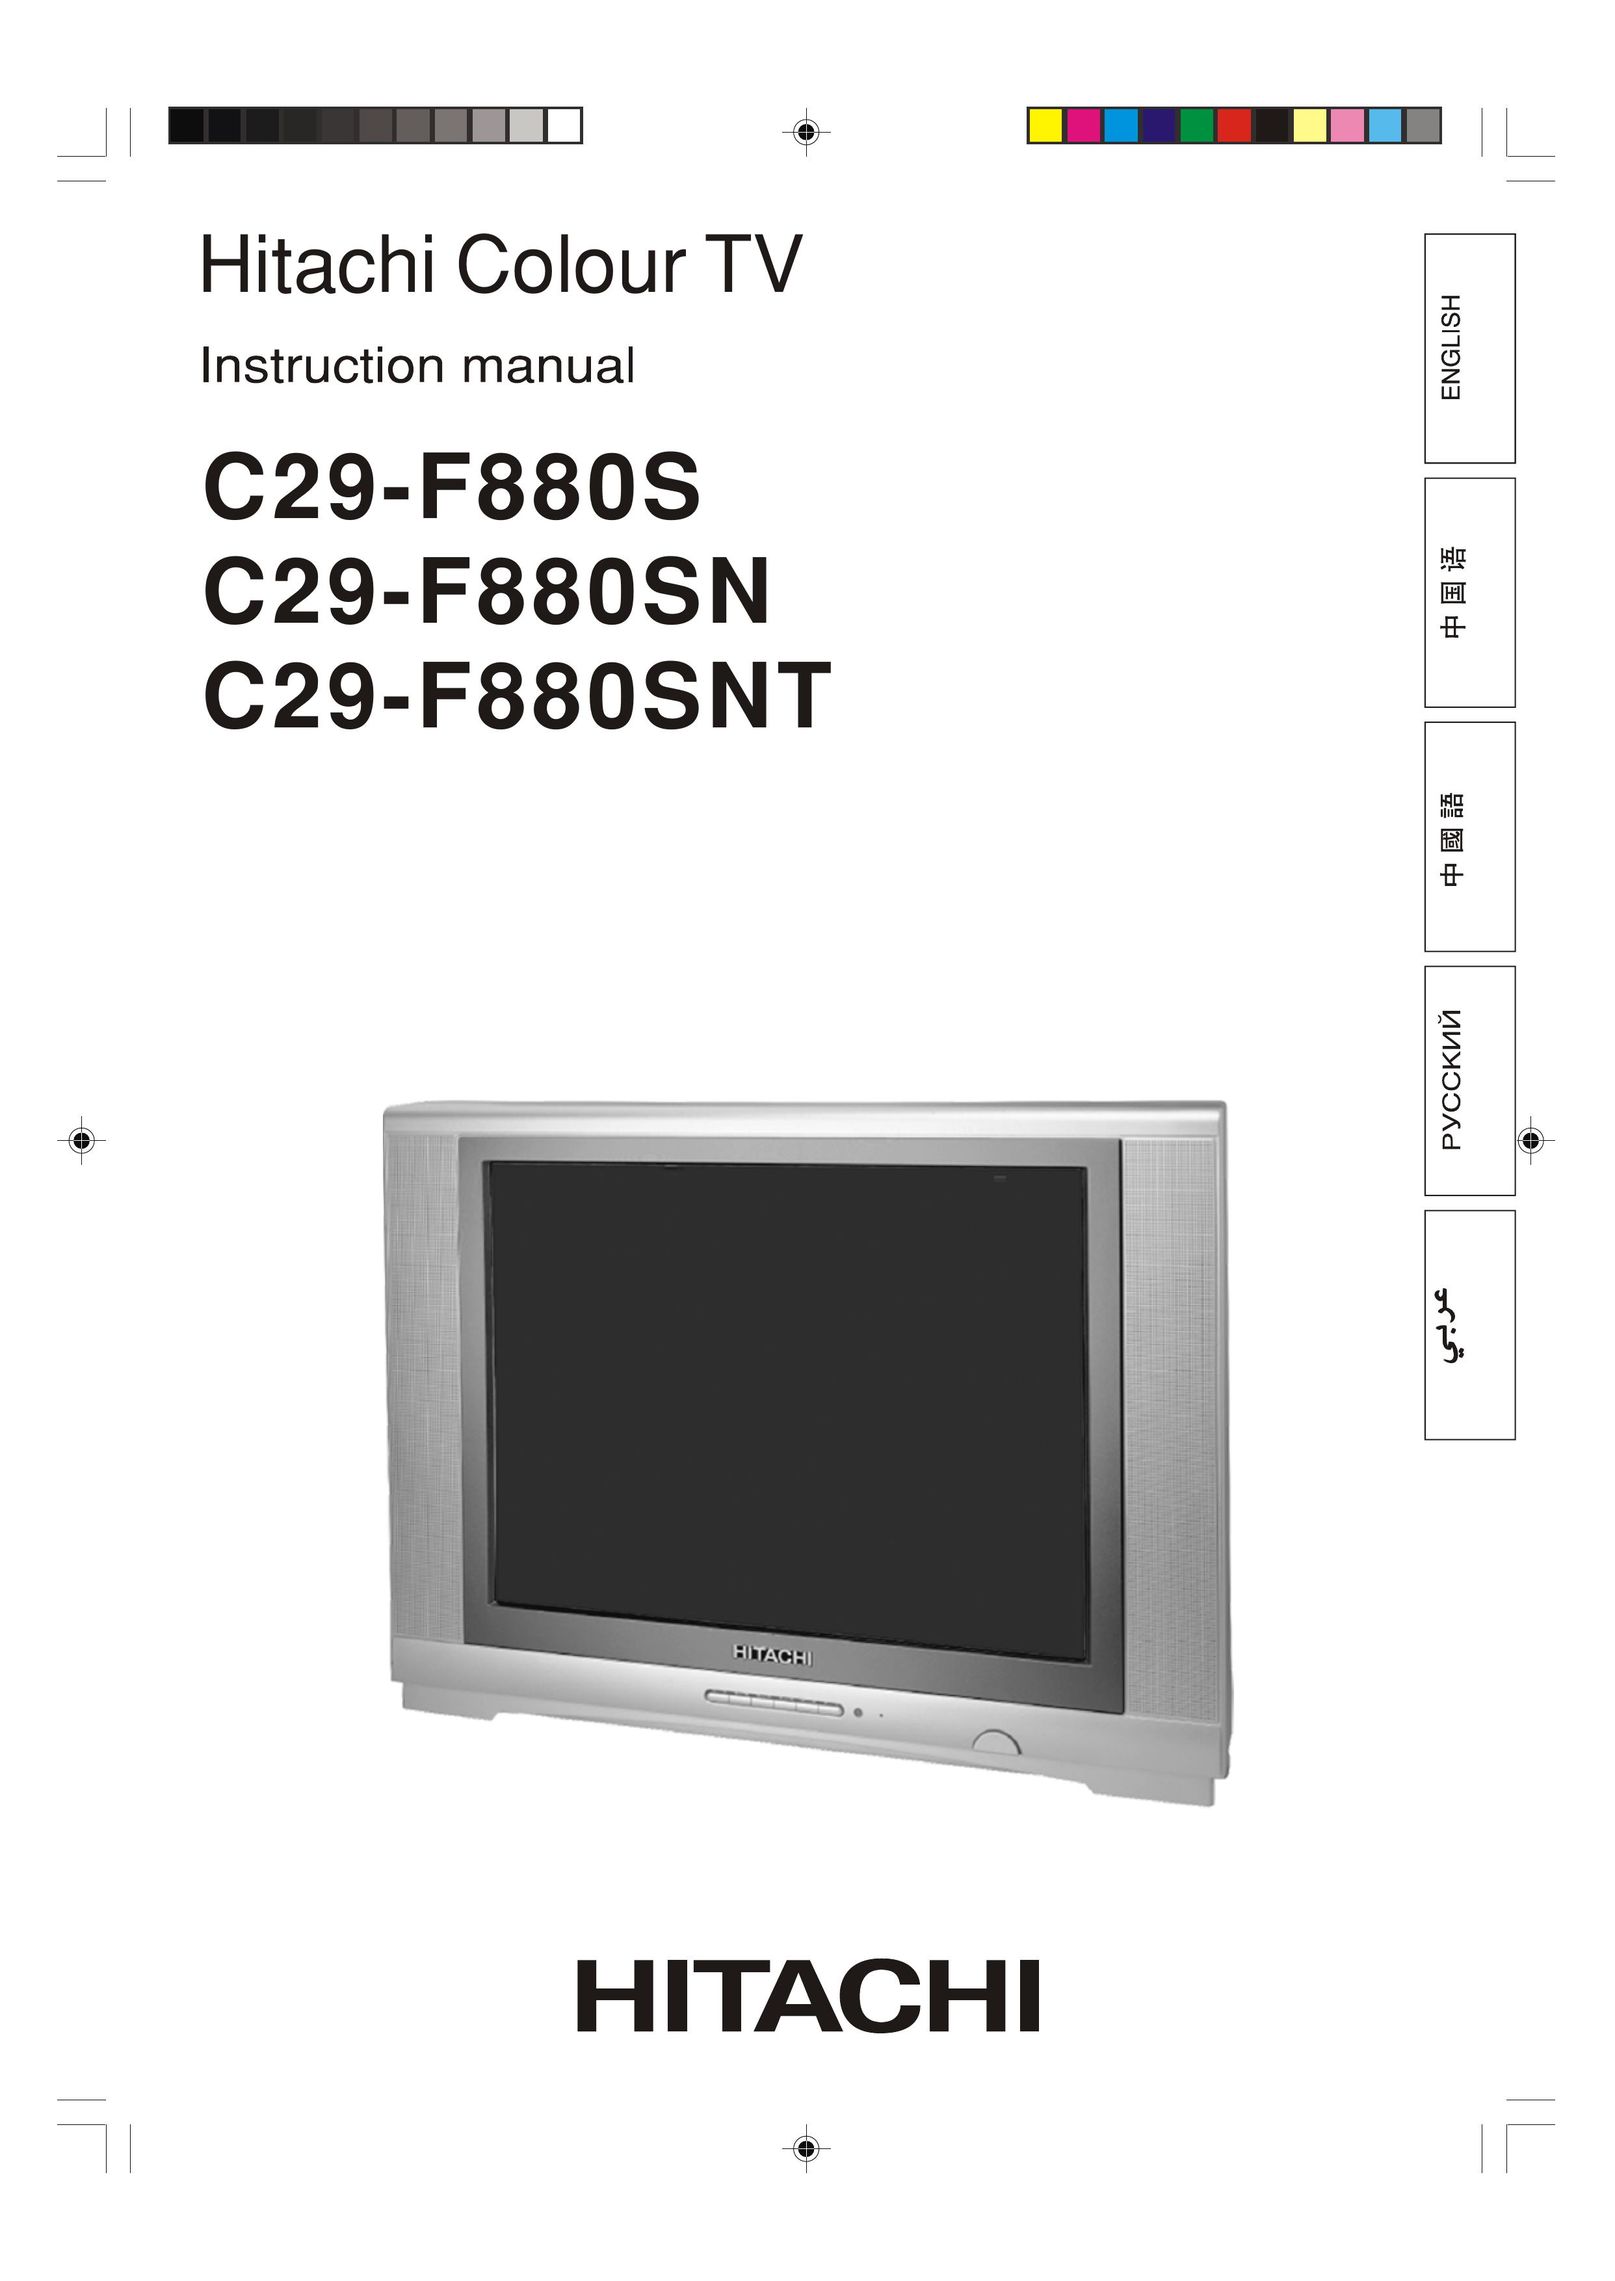 Hitachi C29-F880SN CRT Television User Manual